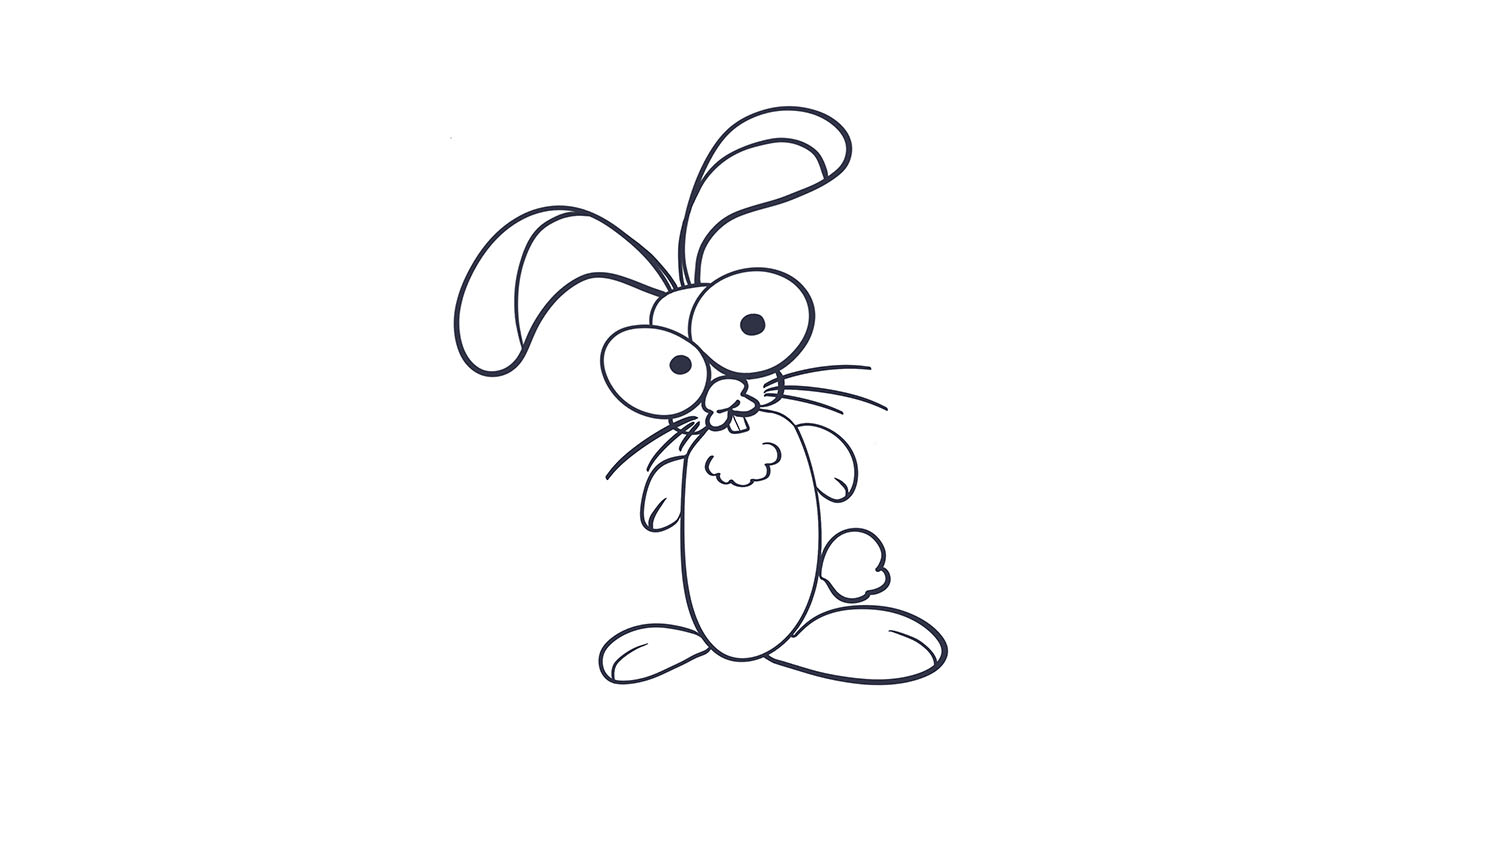 2. Conejo / Rabbit. 103dibujos